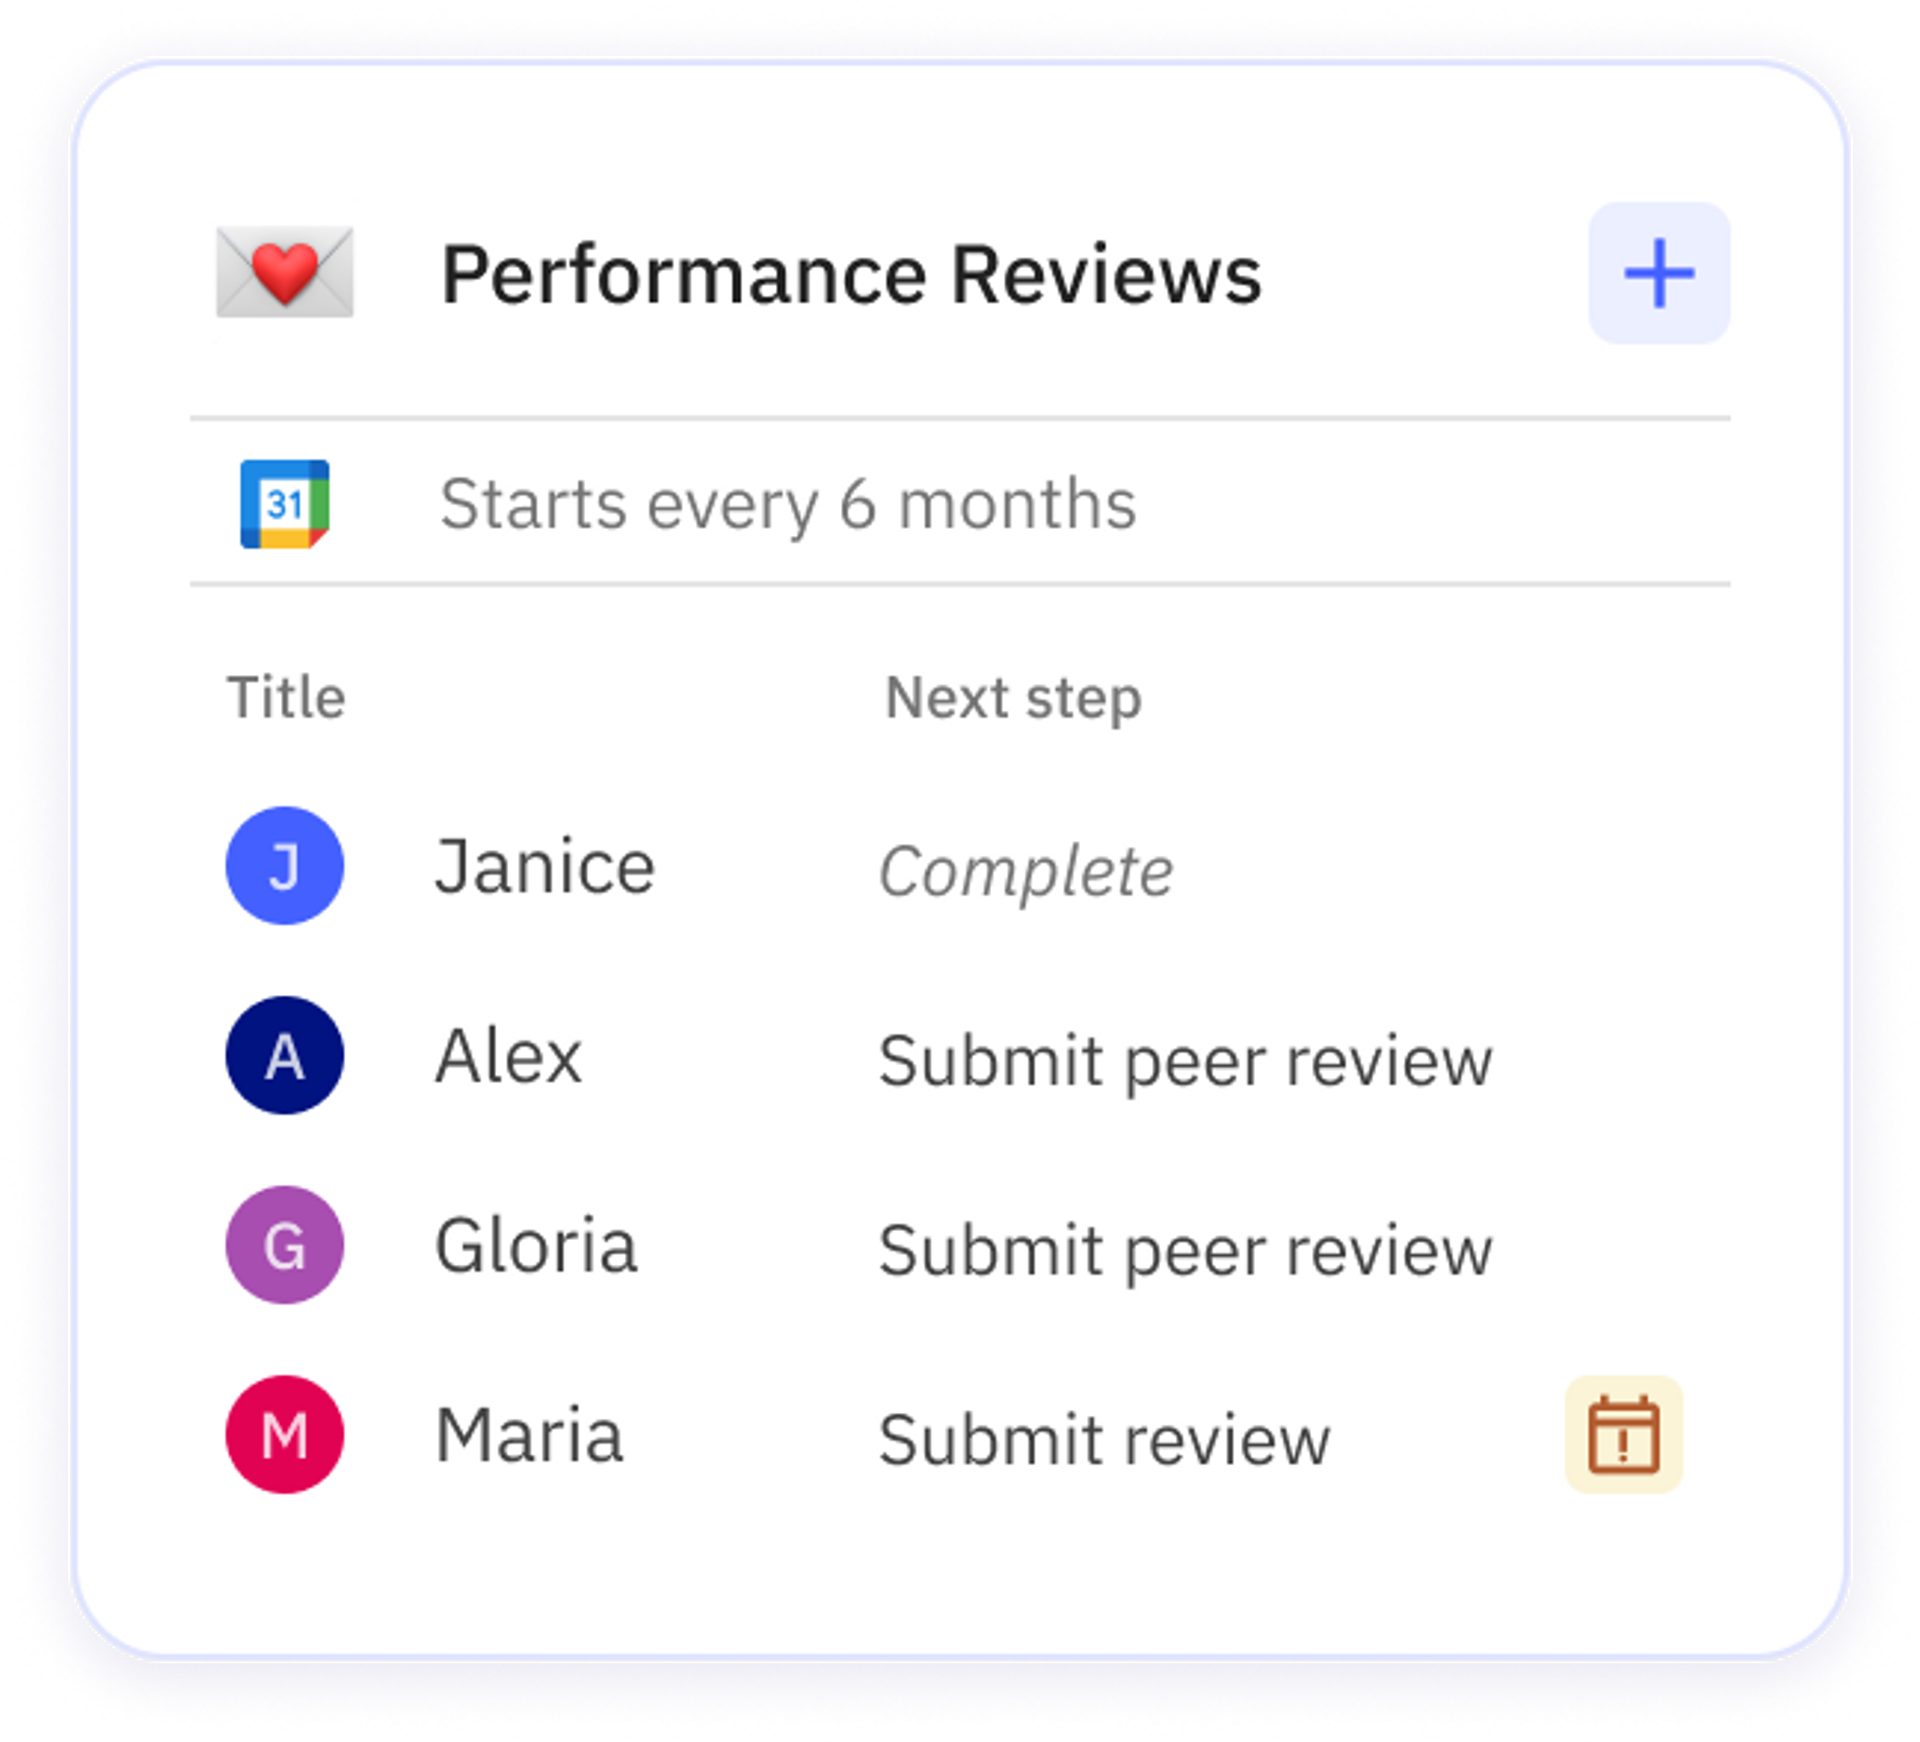 Managing performance reviews